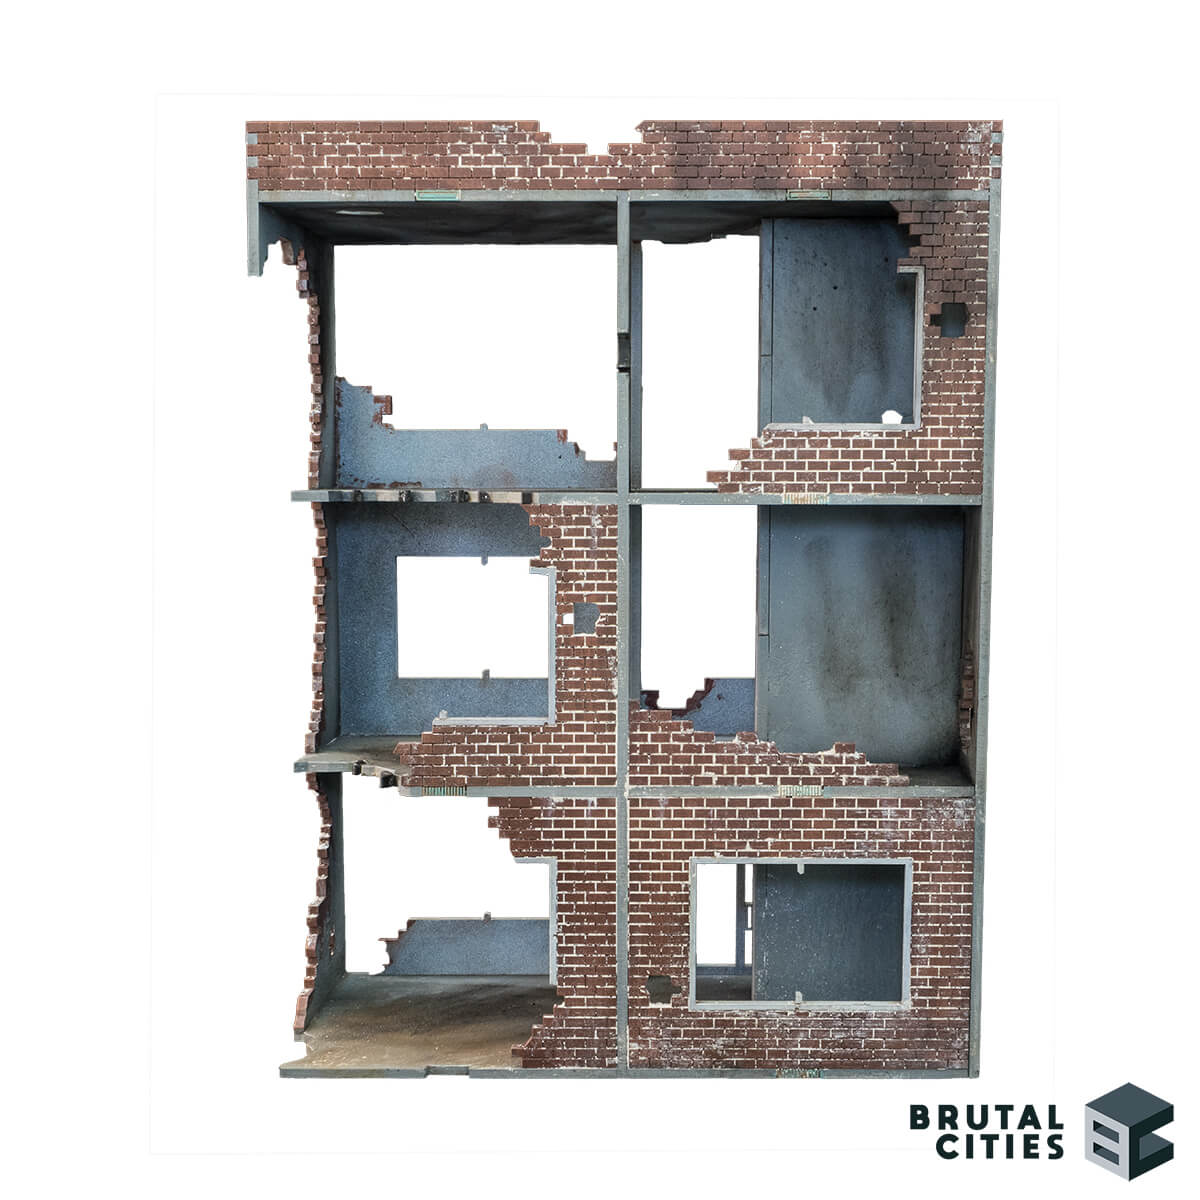 28mm modern brick ruined apartment